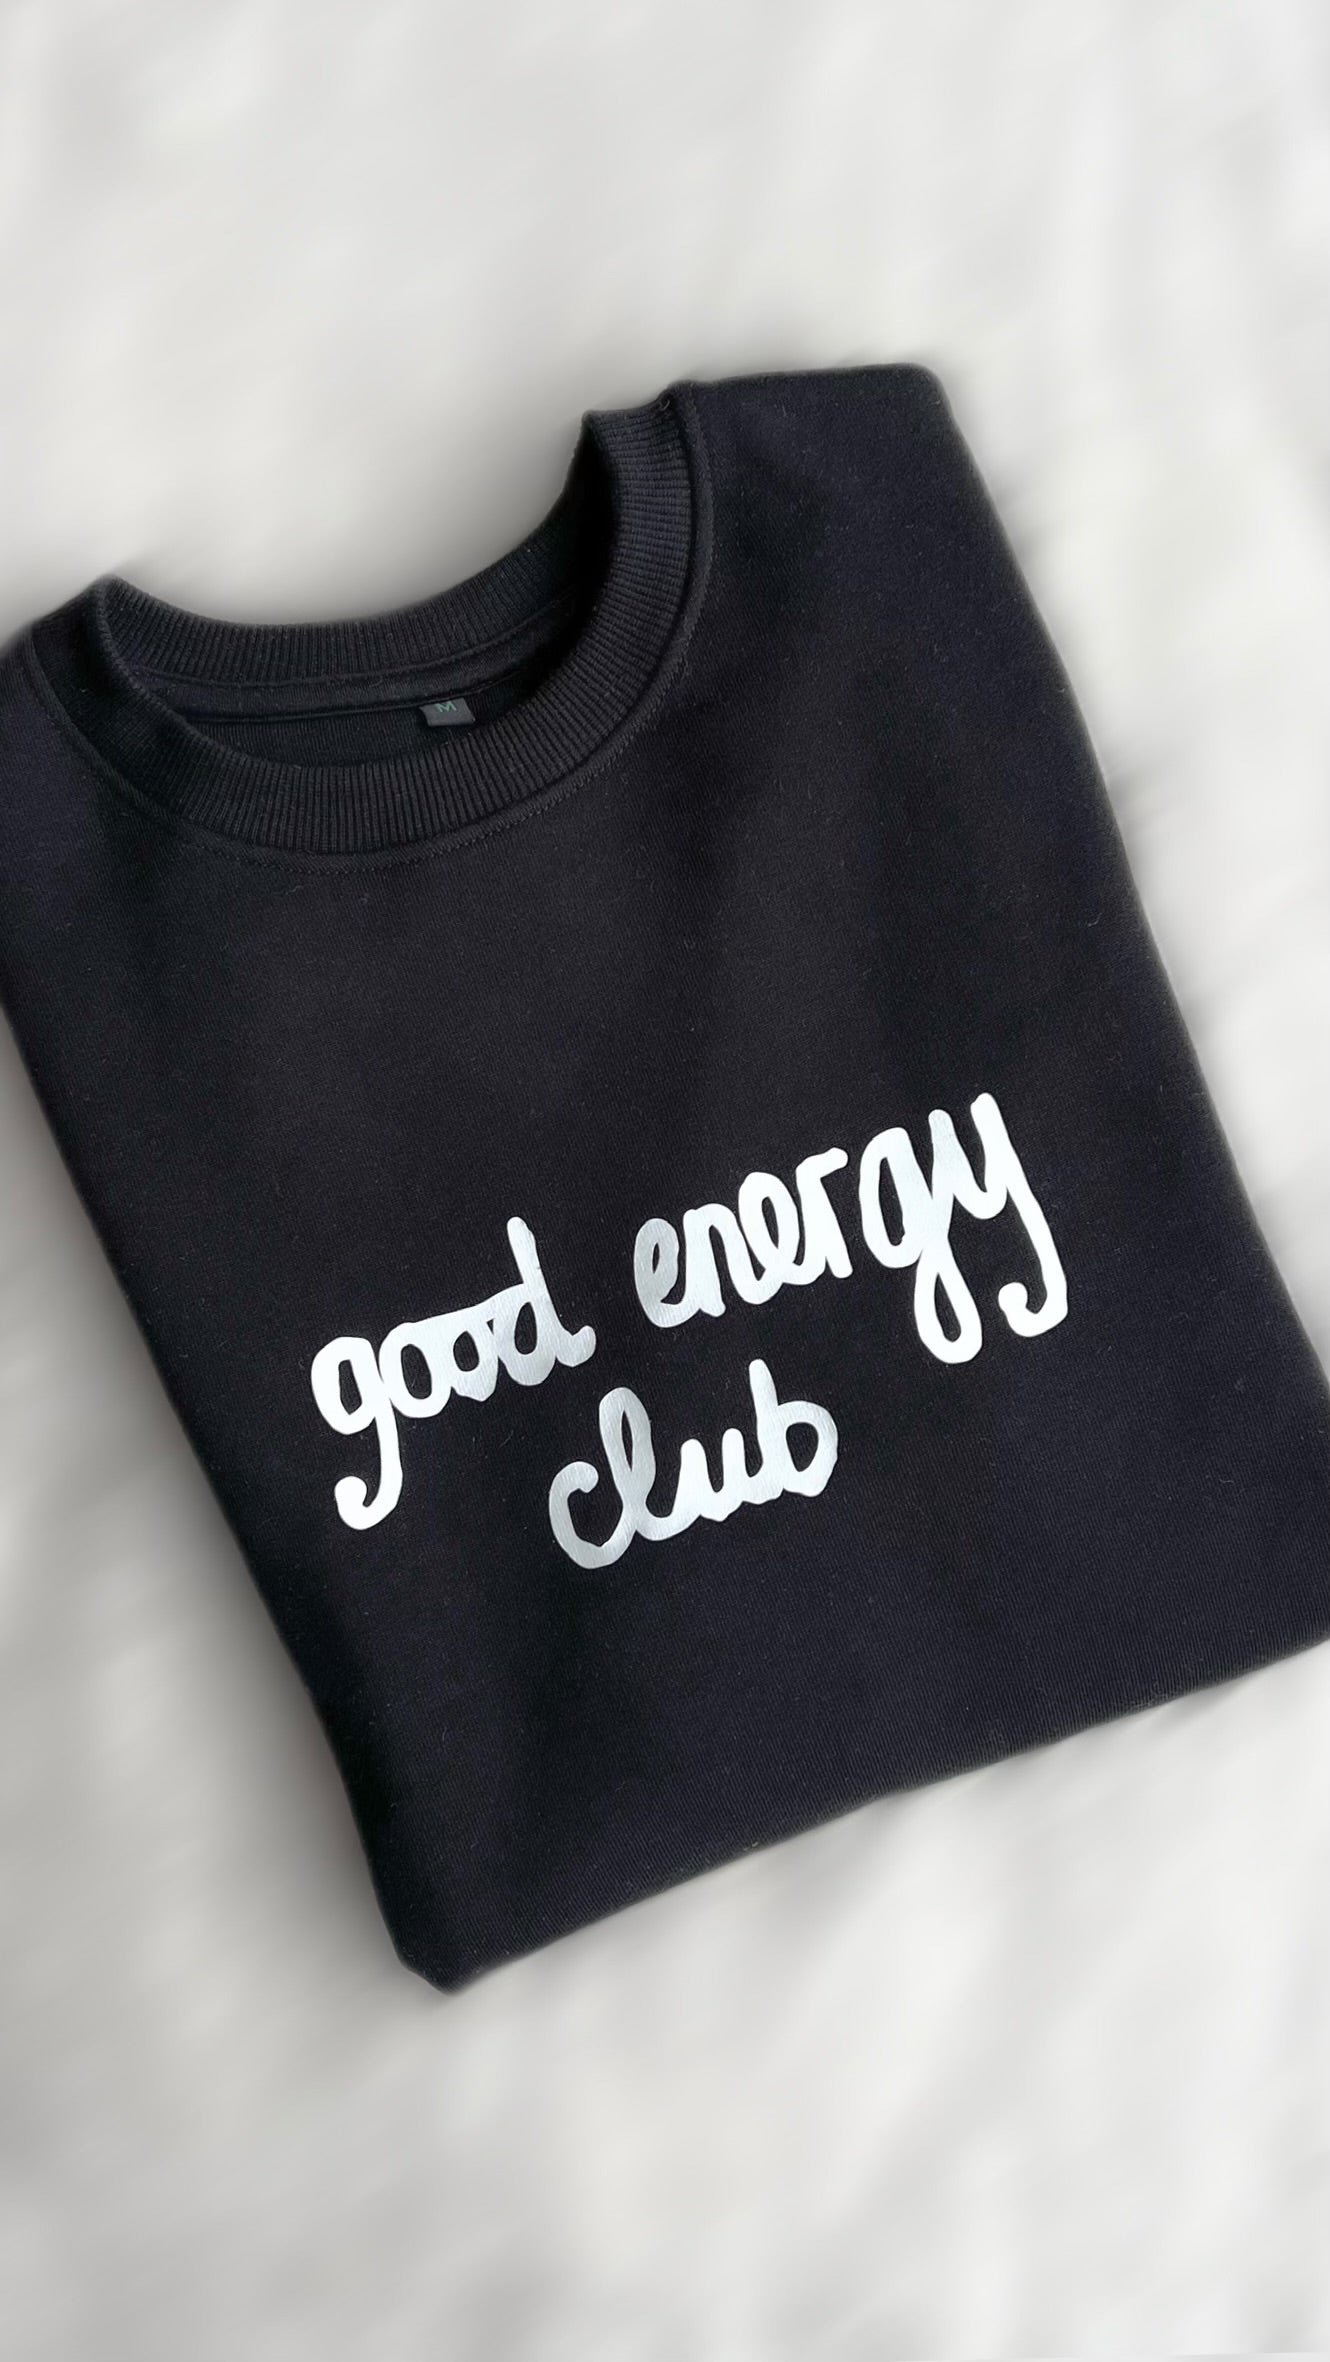 Inspirational Sweater: Good energy club